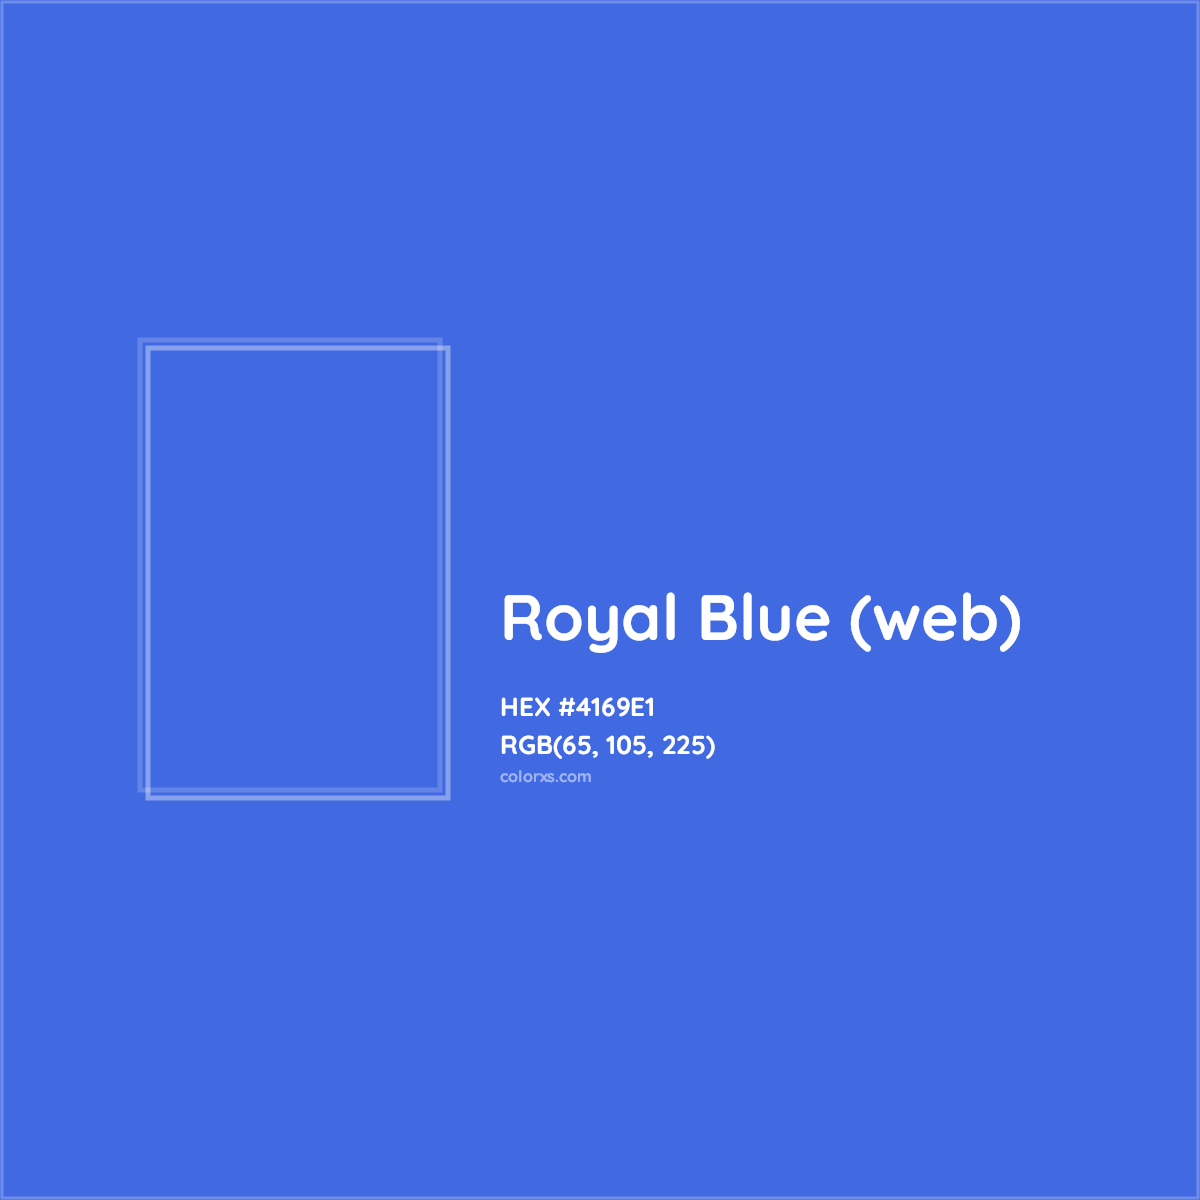 Royal Blue information, Hsl, Rgb